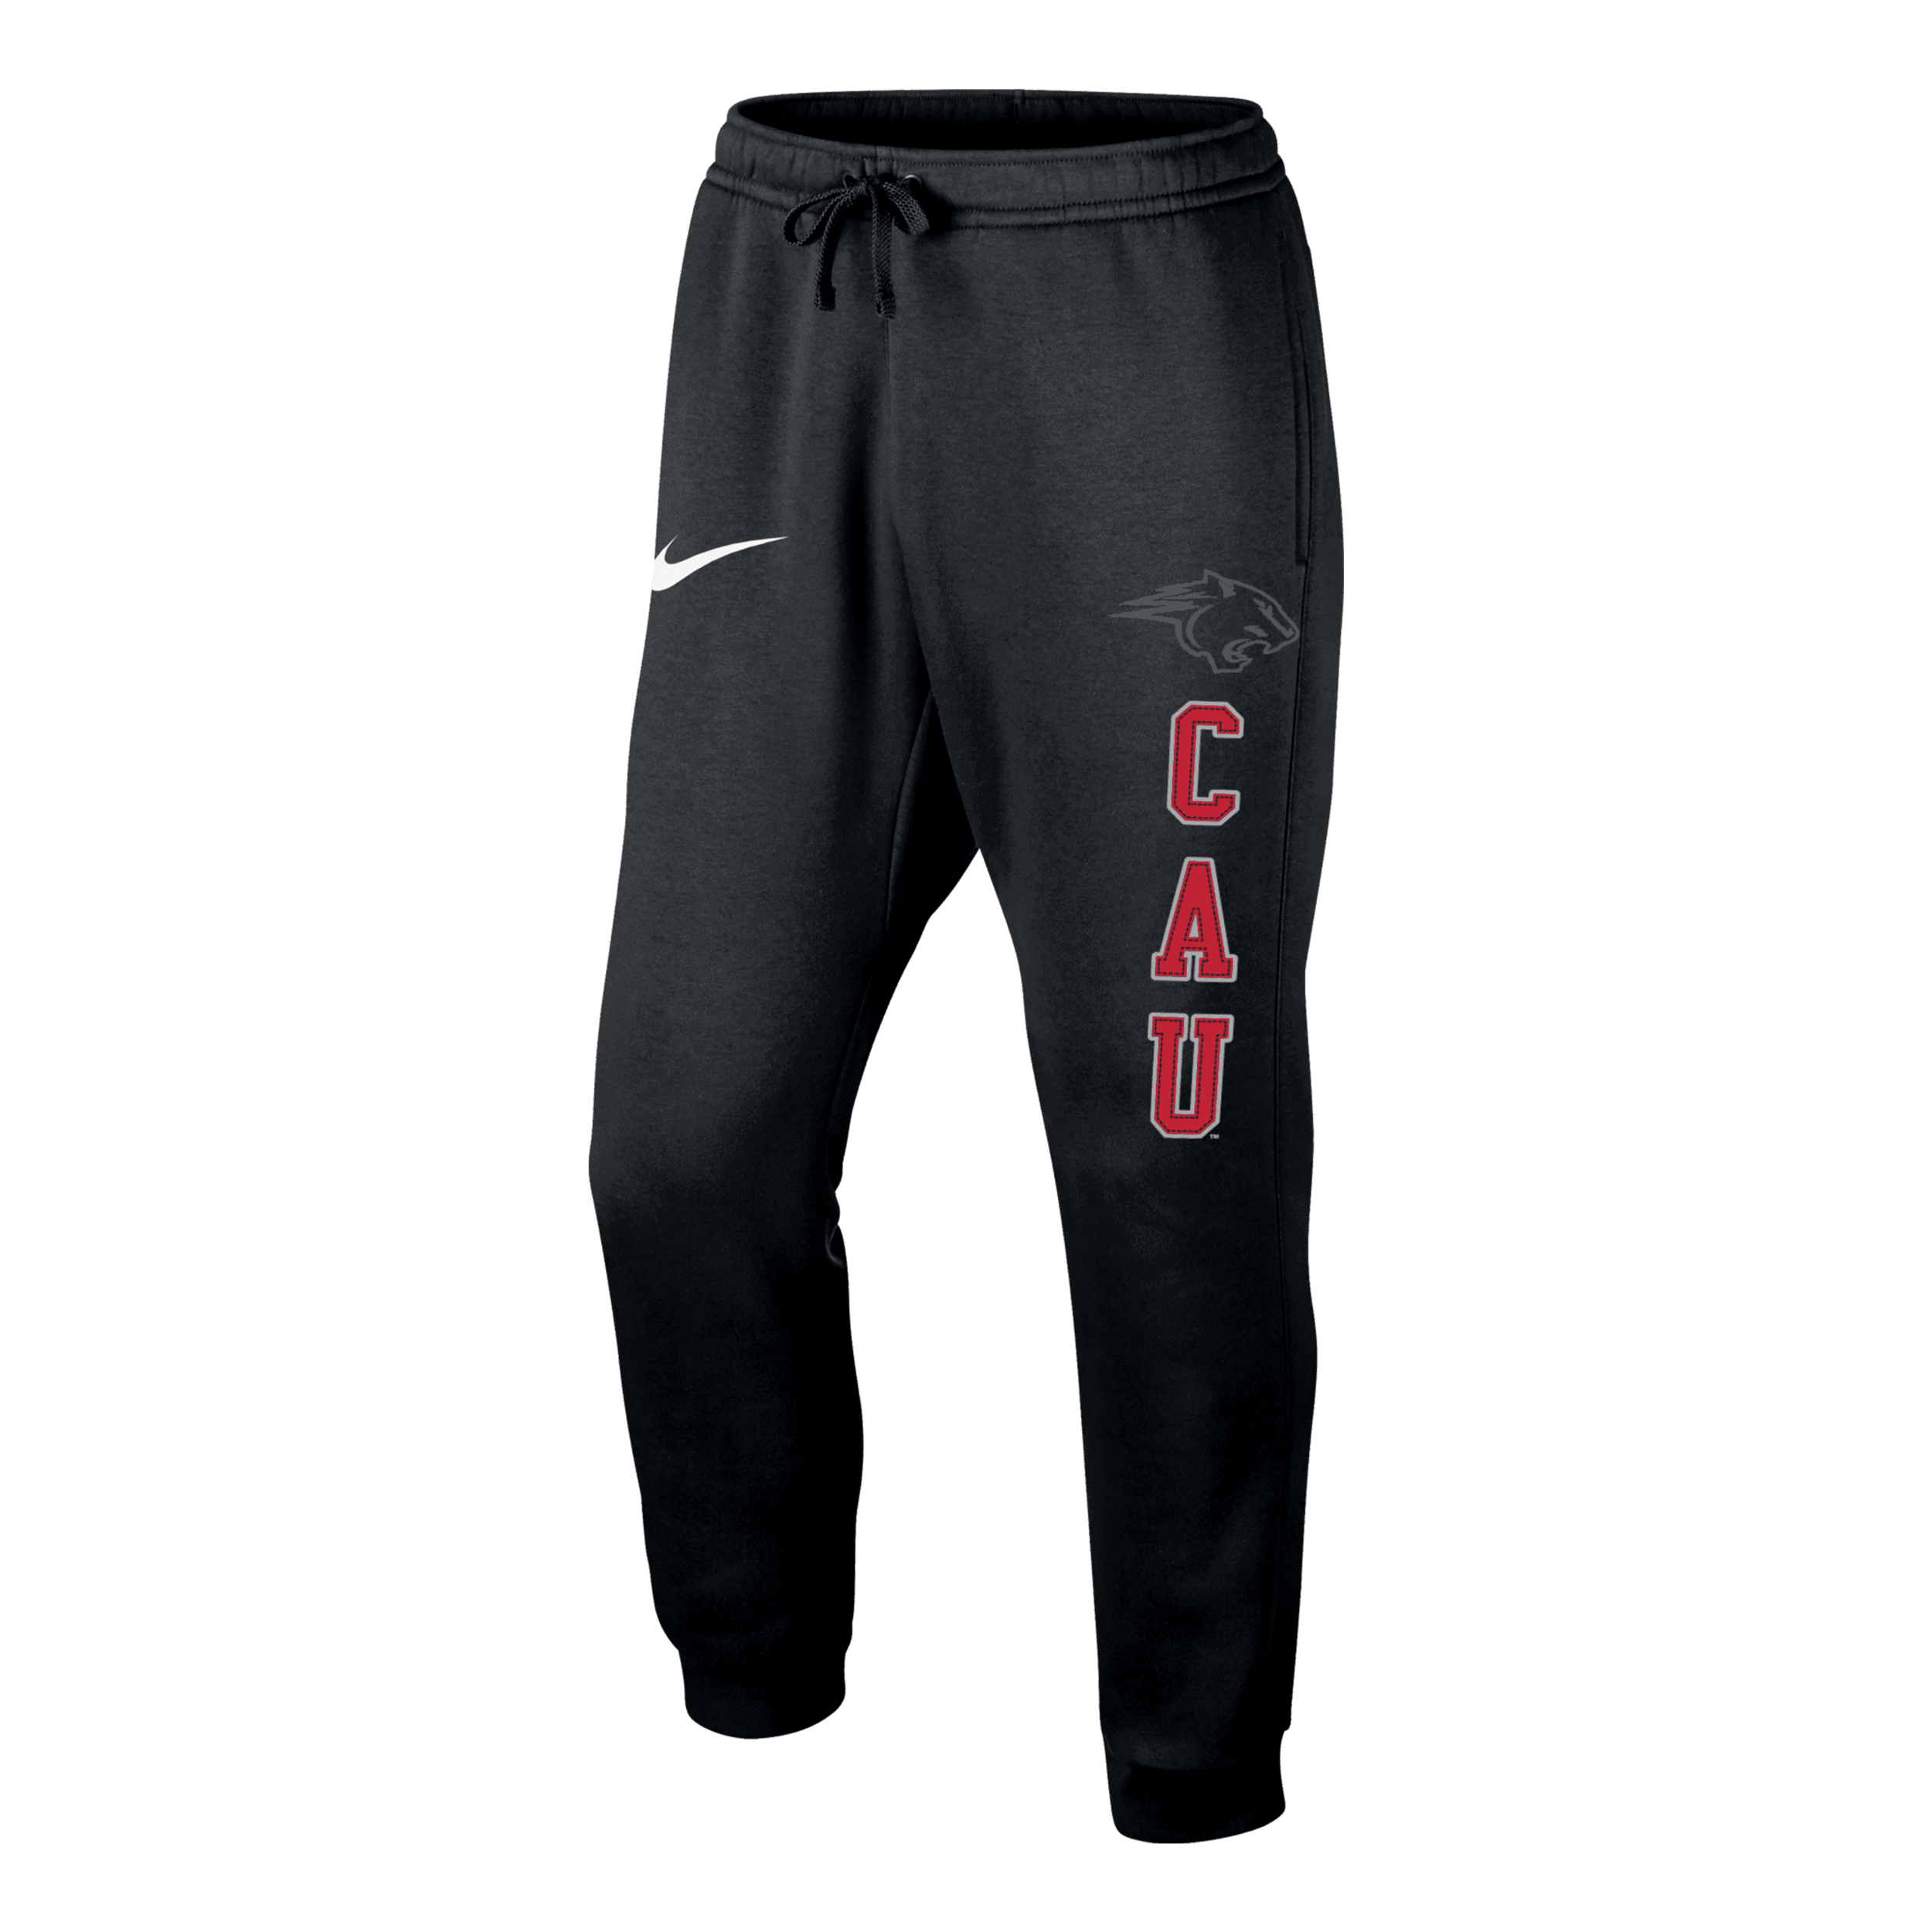 Nike Men's College Club Fleece (clark Atlanta) Jogger Pants In Black